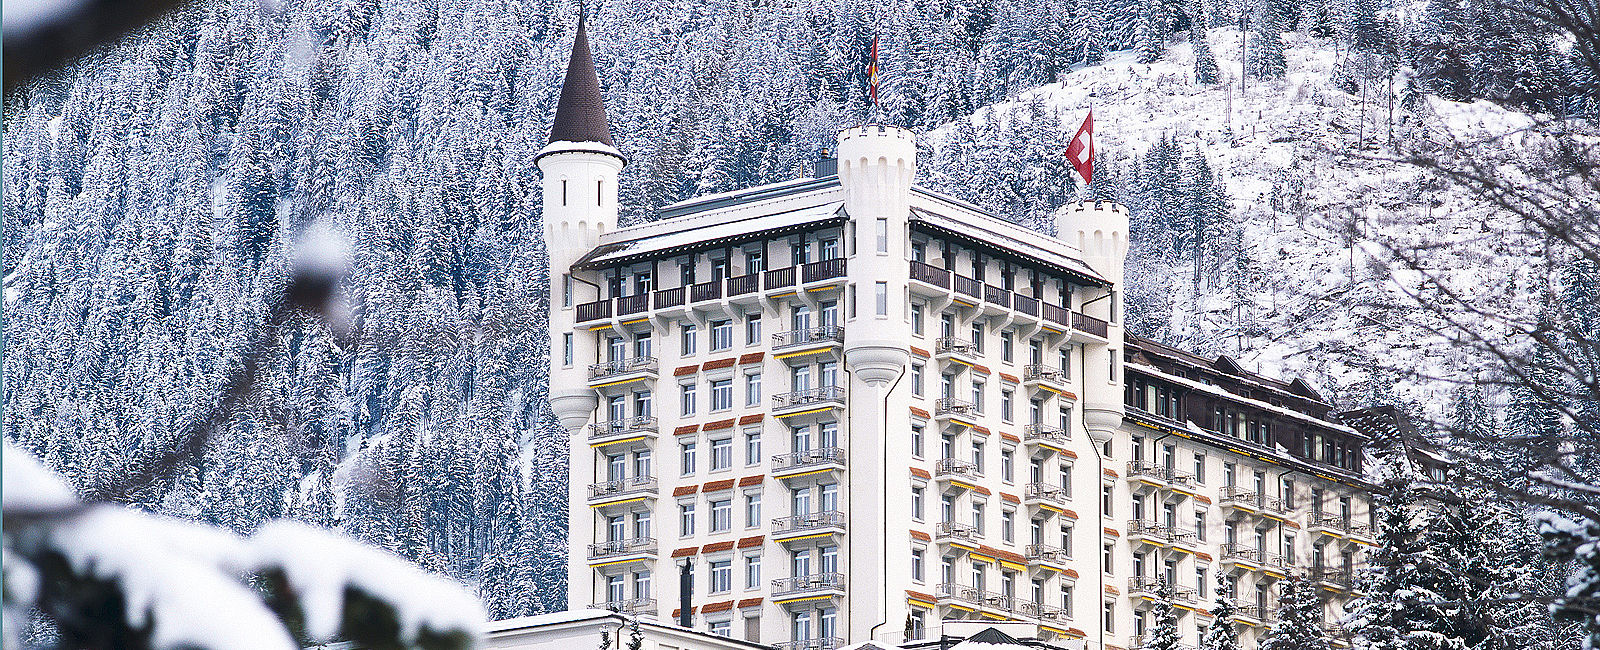 VERY SPECIAL HOTEL
 Gstaad Palace 
 Grandezza in den Schweizer Bergen 